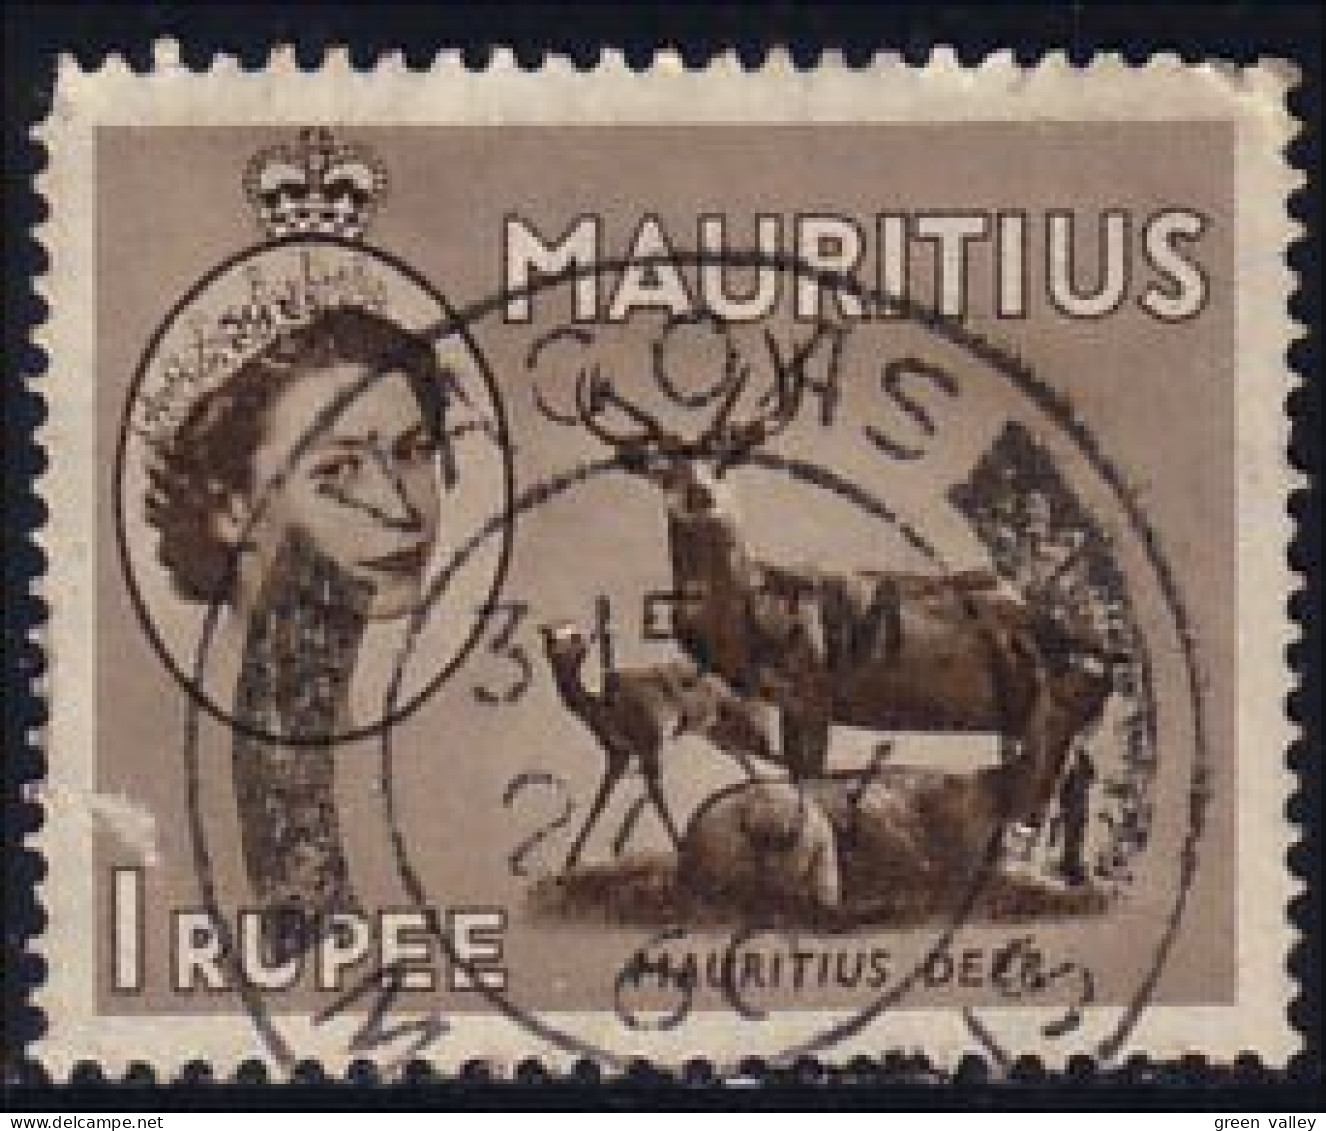 640 Mauritius Ile Maurice Sambar Antelope (MRC-59) - Passereaux